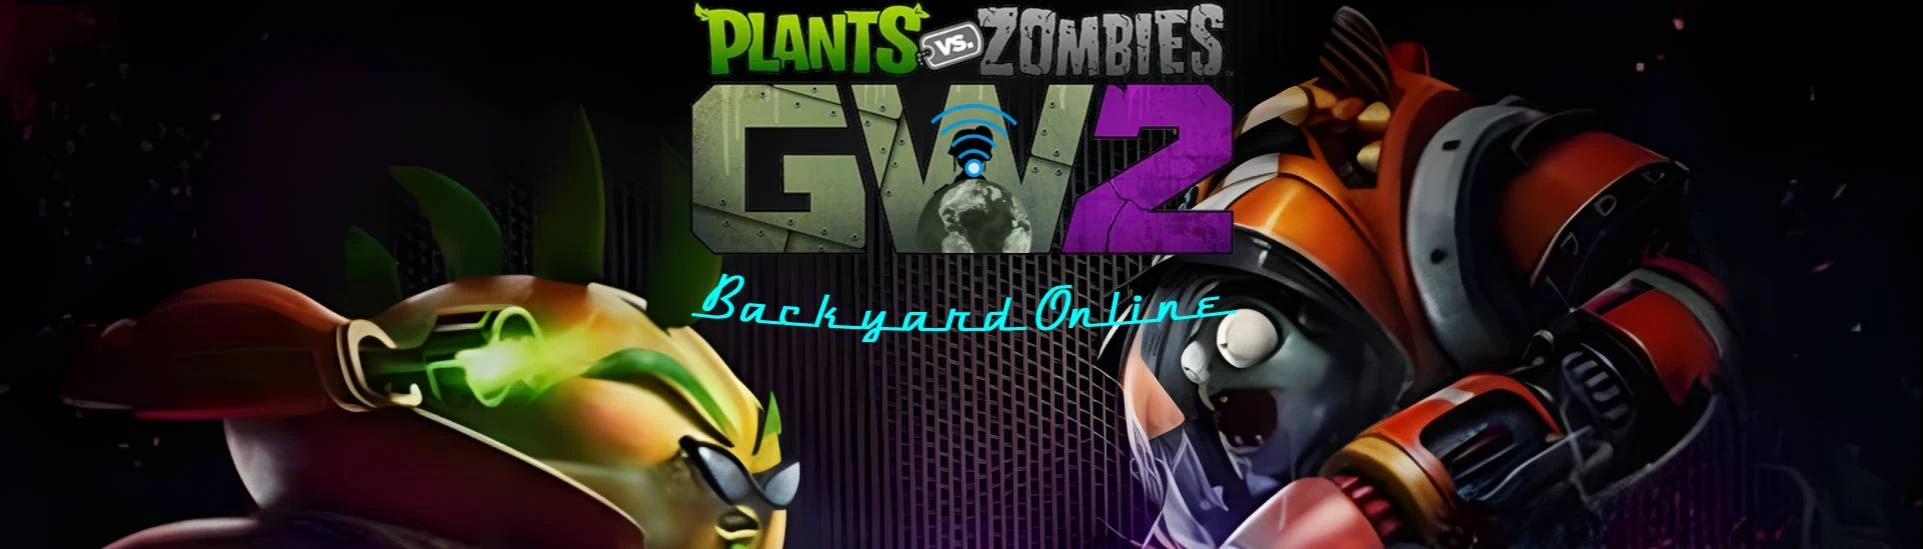 PvZ GW2 Backyard Online at Plants vs. Zombies: Garden Warfare 2 Nexus -  Mods and community